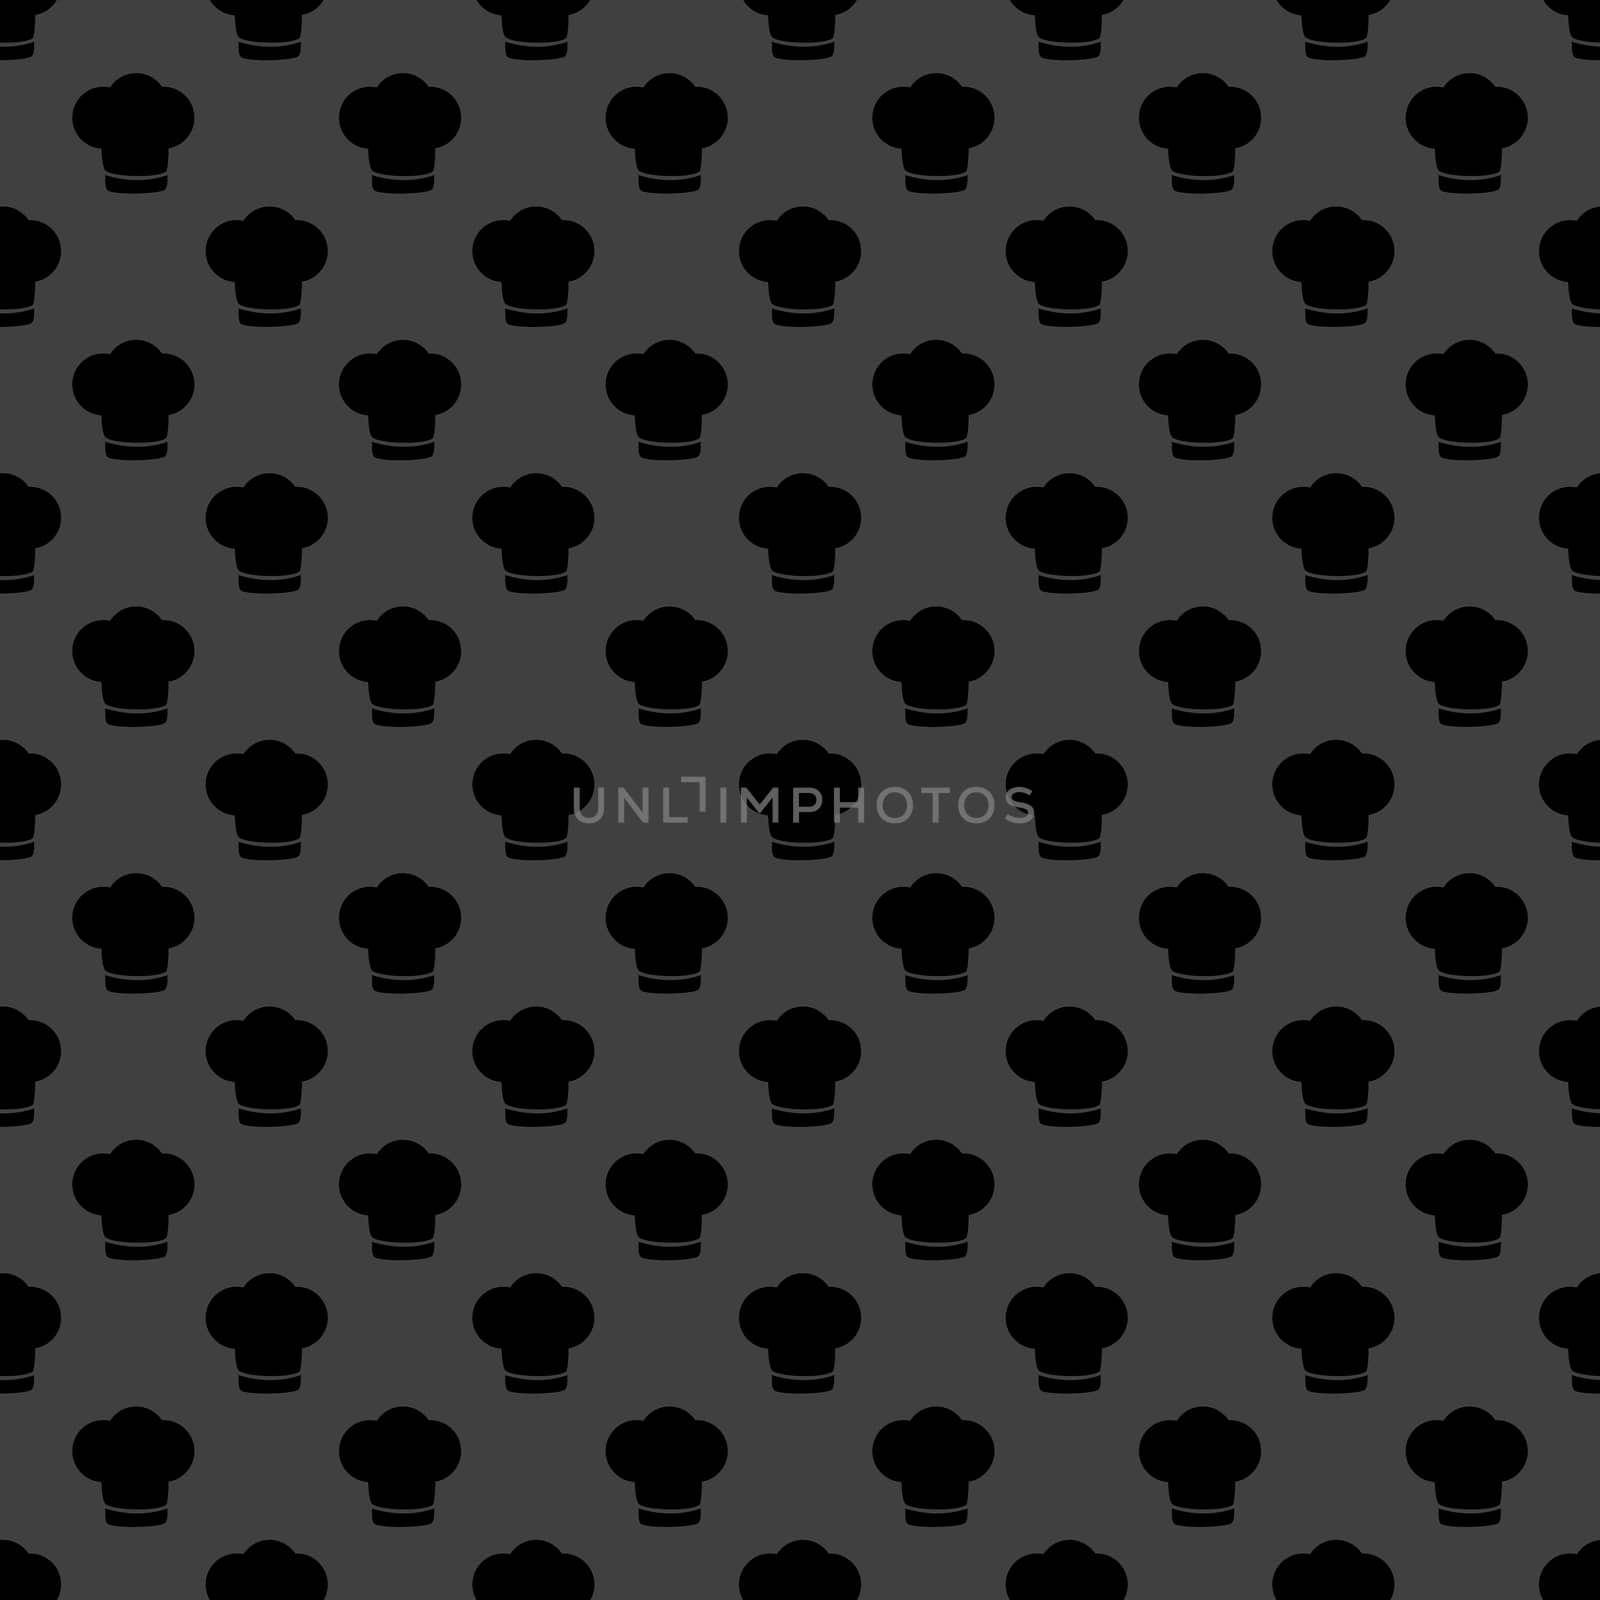 Chef cap web icon. flat design. Seamless gray pattern.